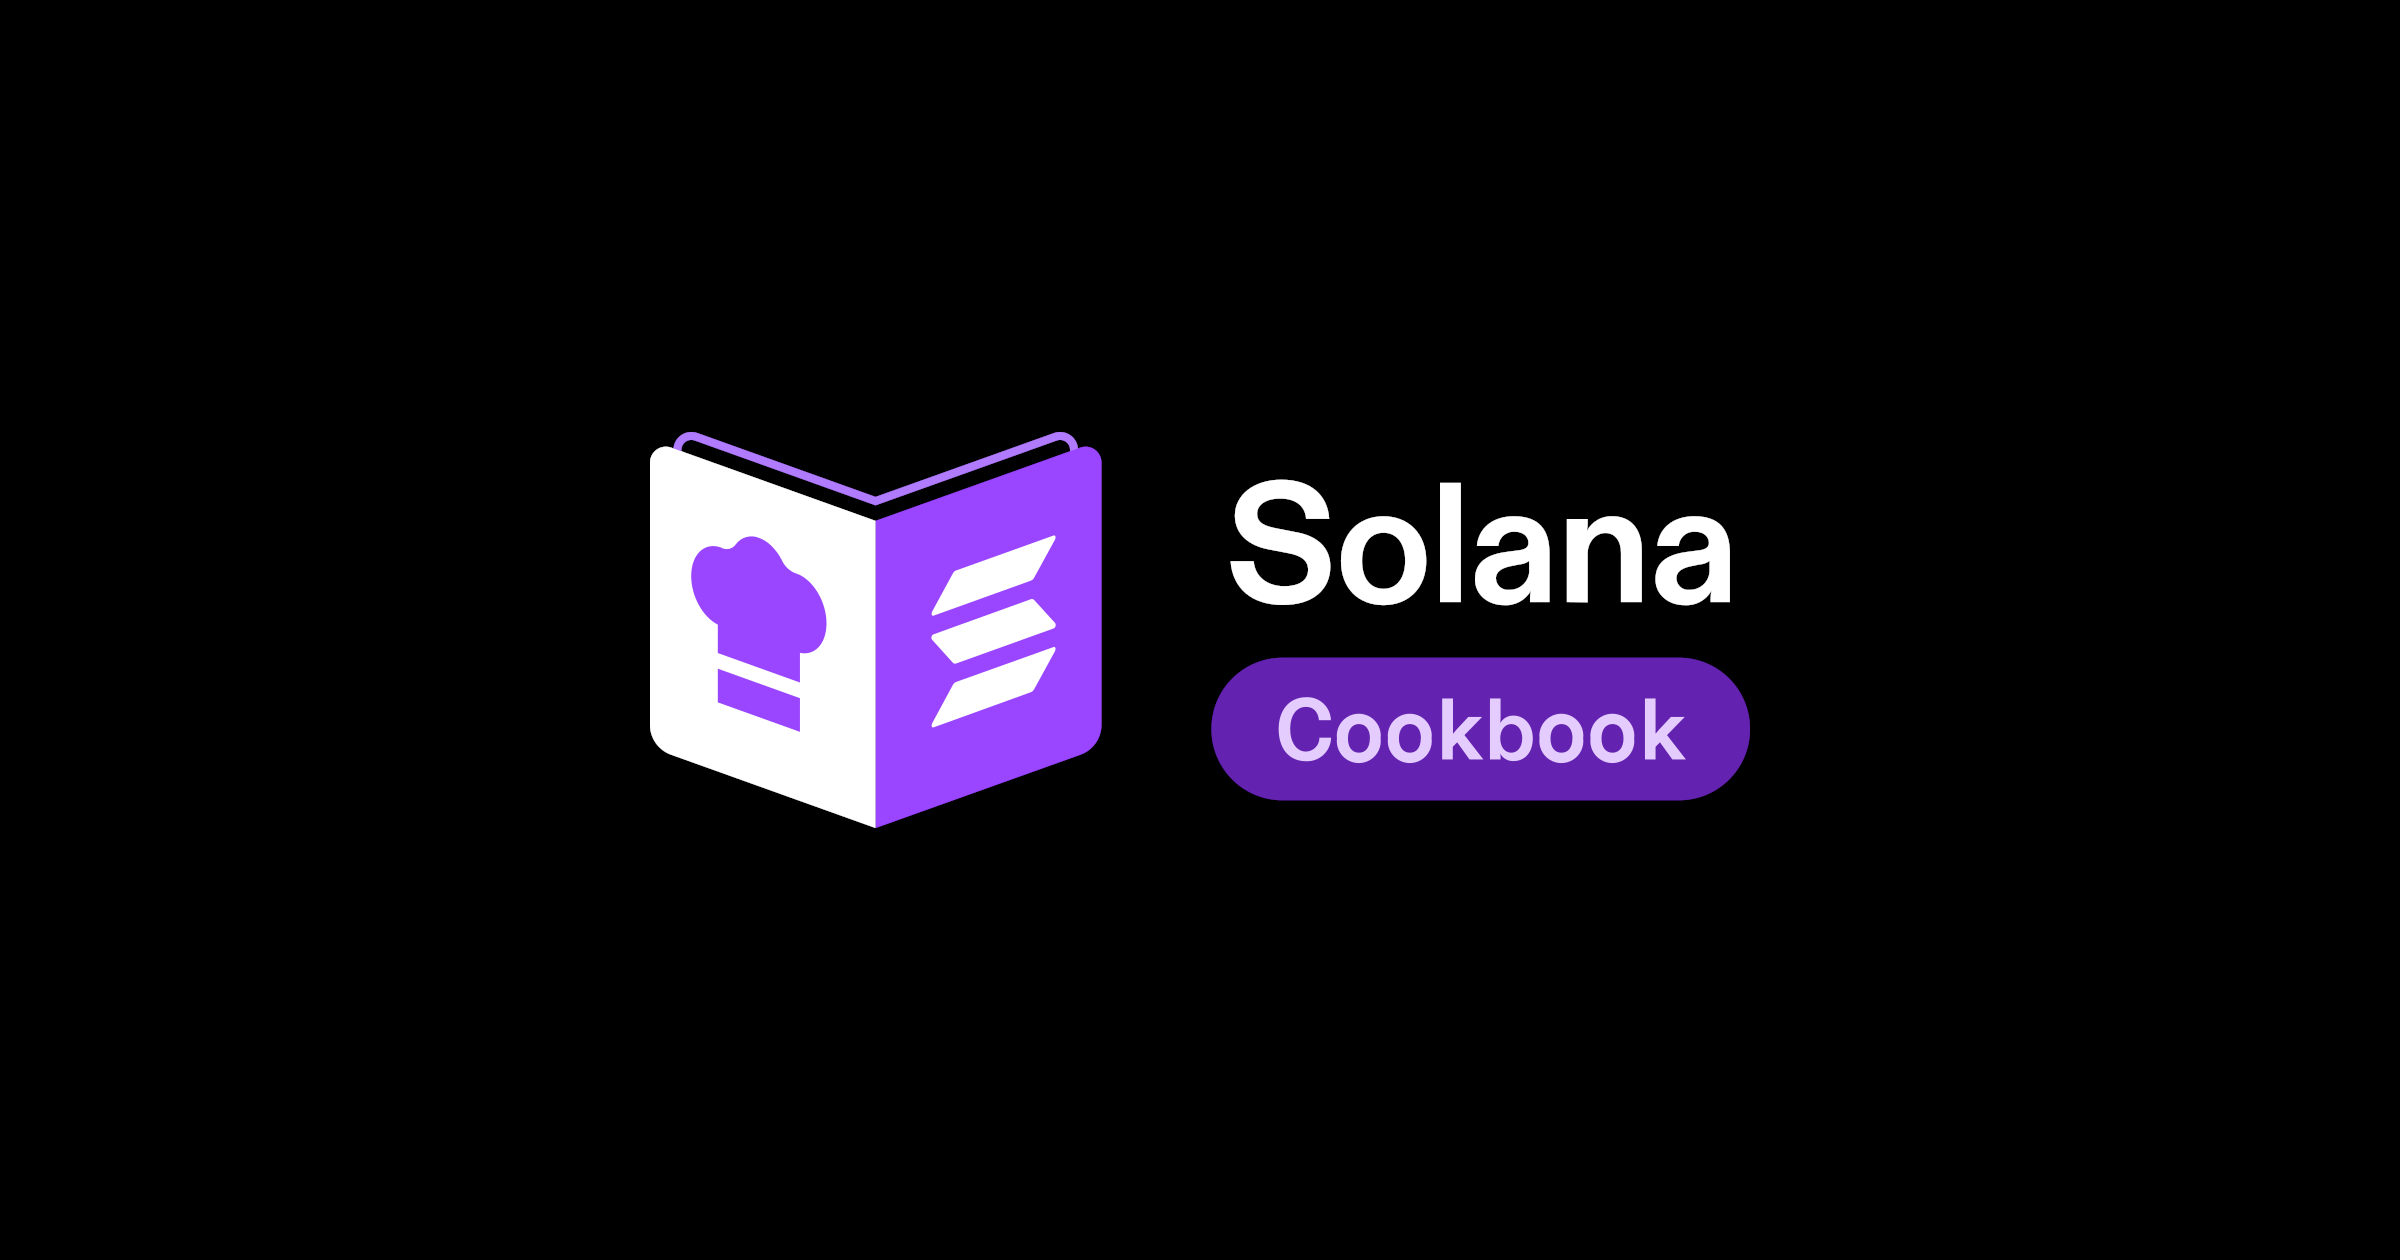 Solana Cookbook